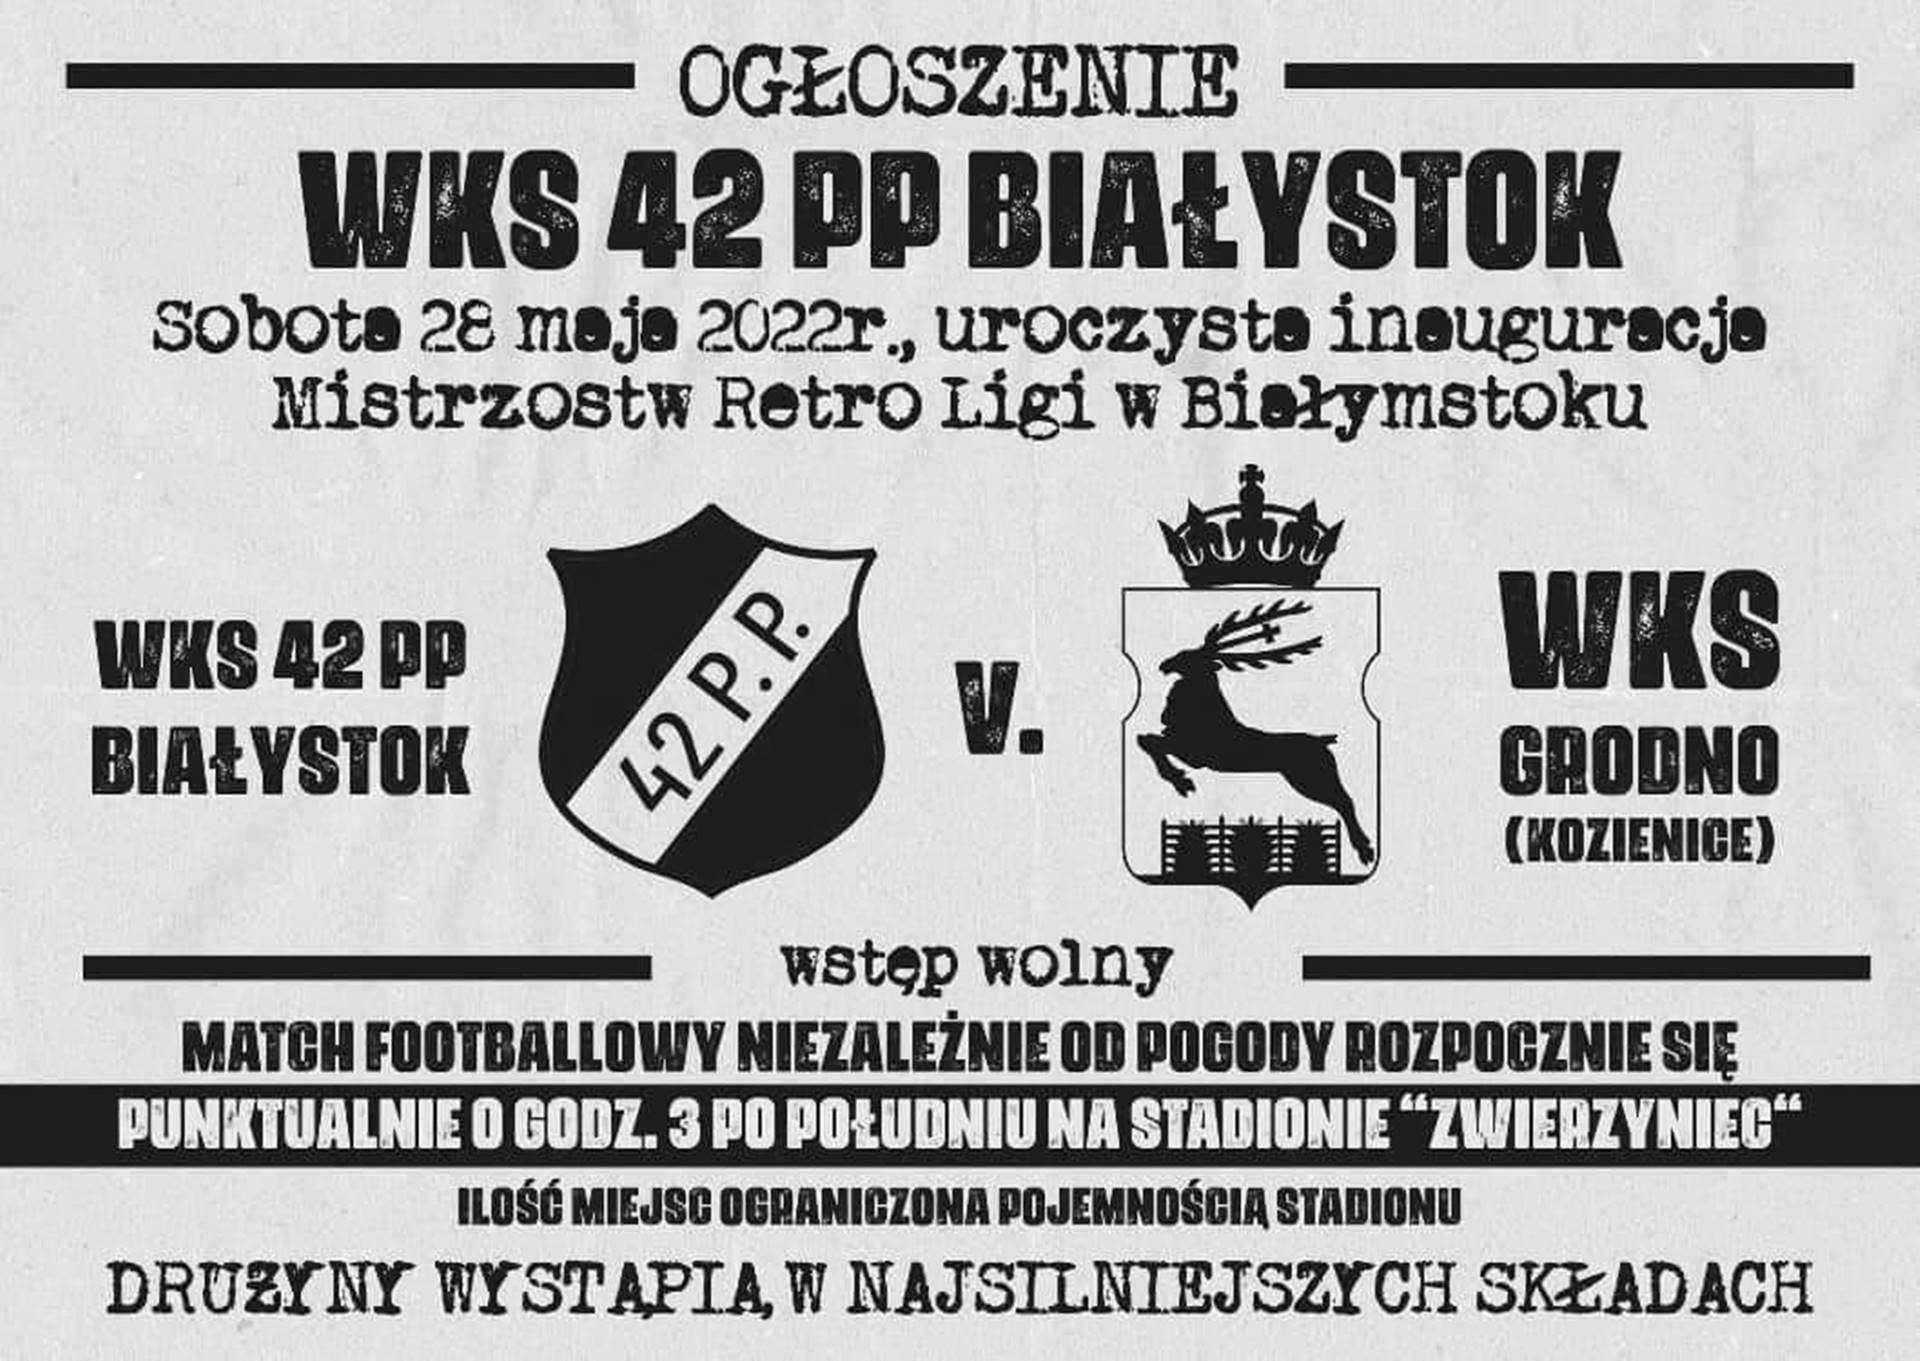 Źródło: WKS 42 PP Białystok / Facebook